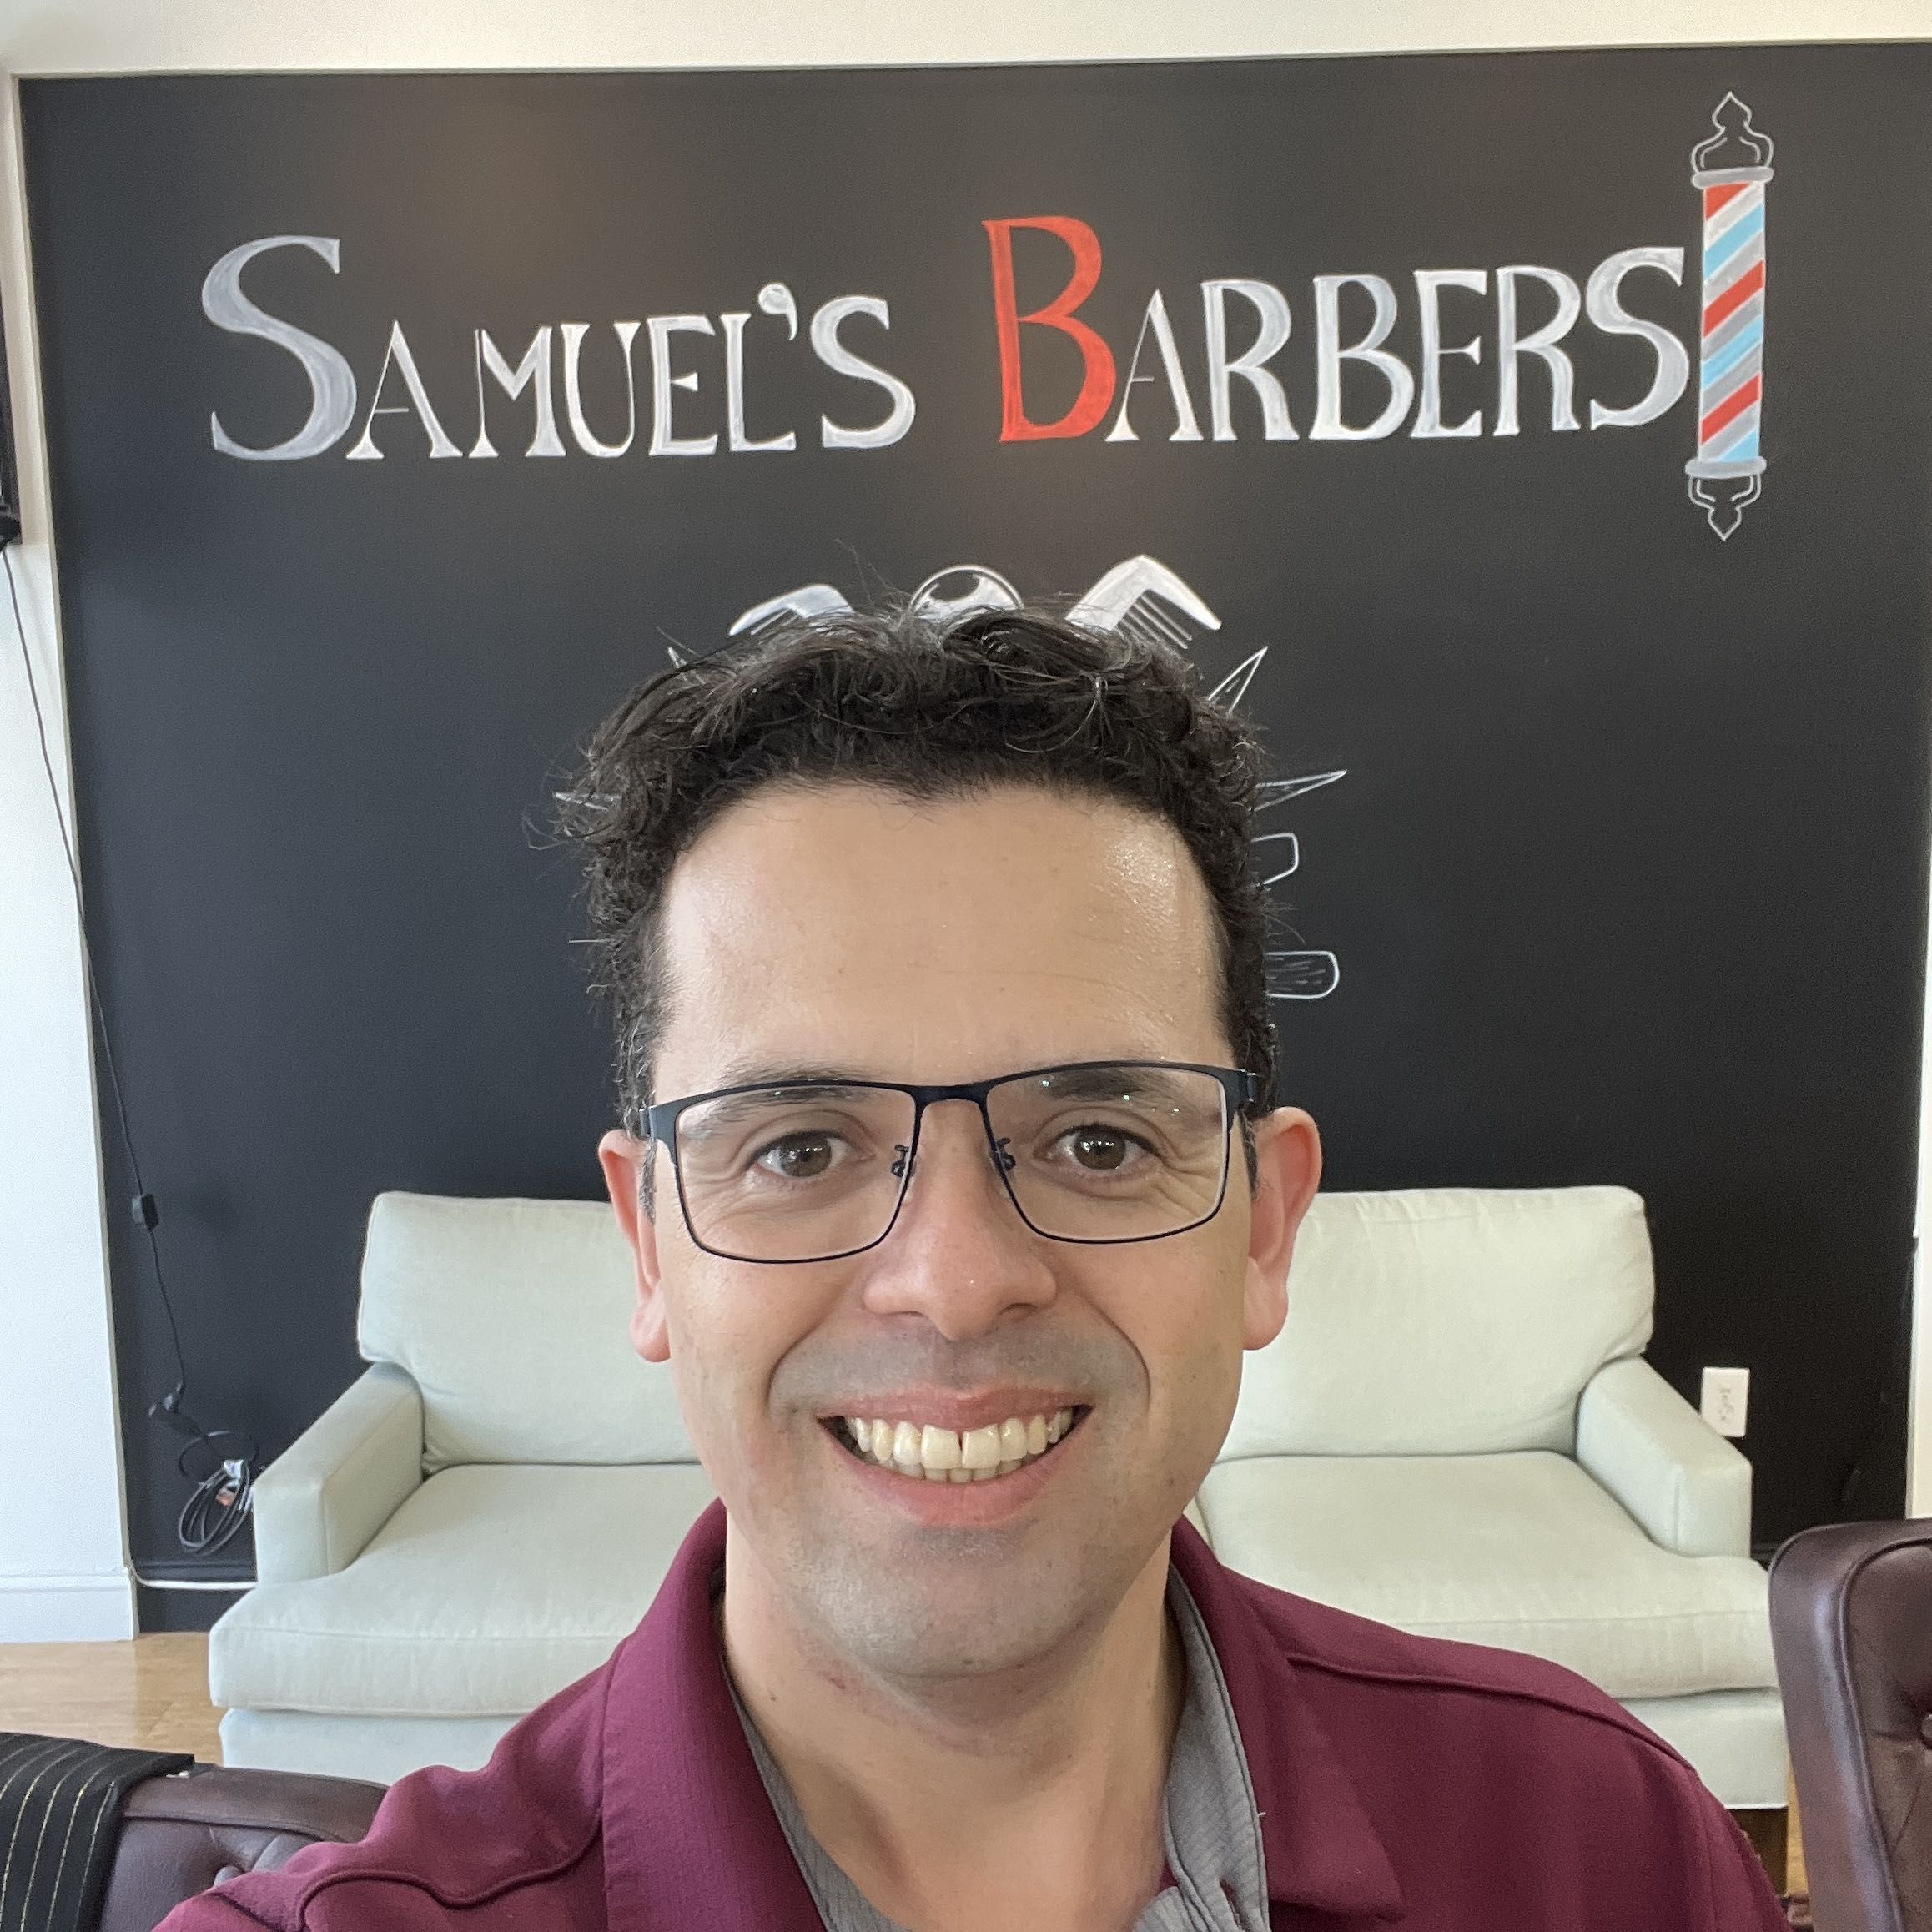 Samuel - Samuel’s Barbers